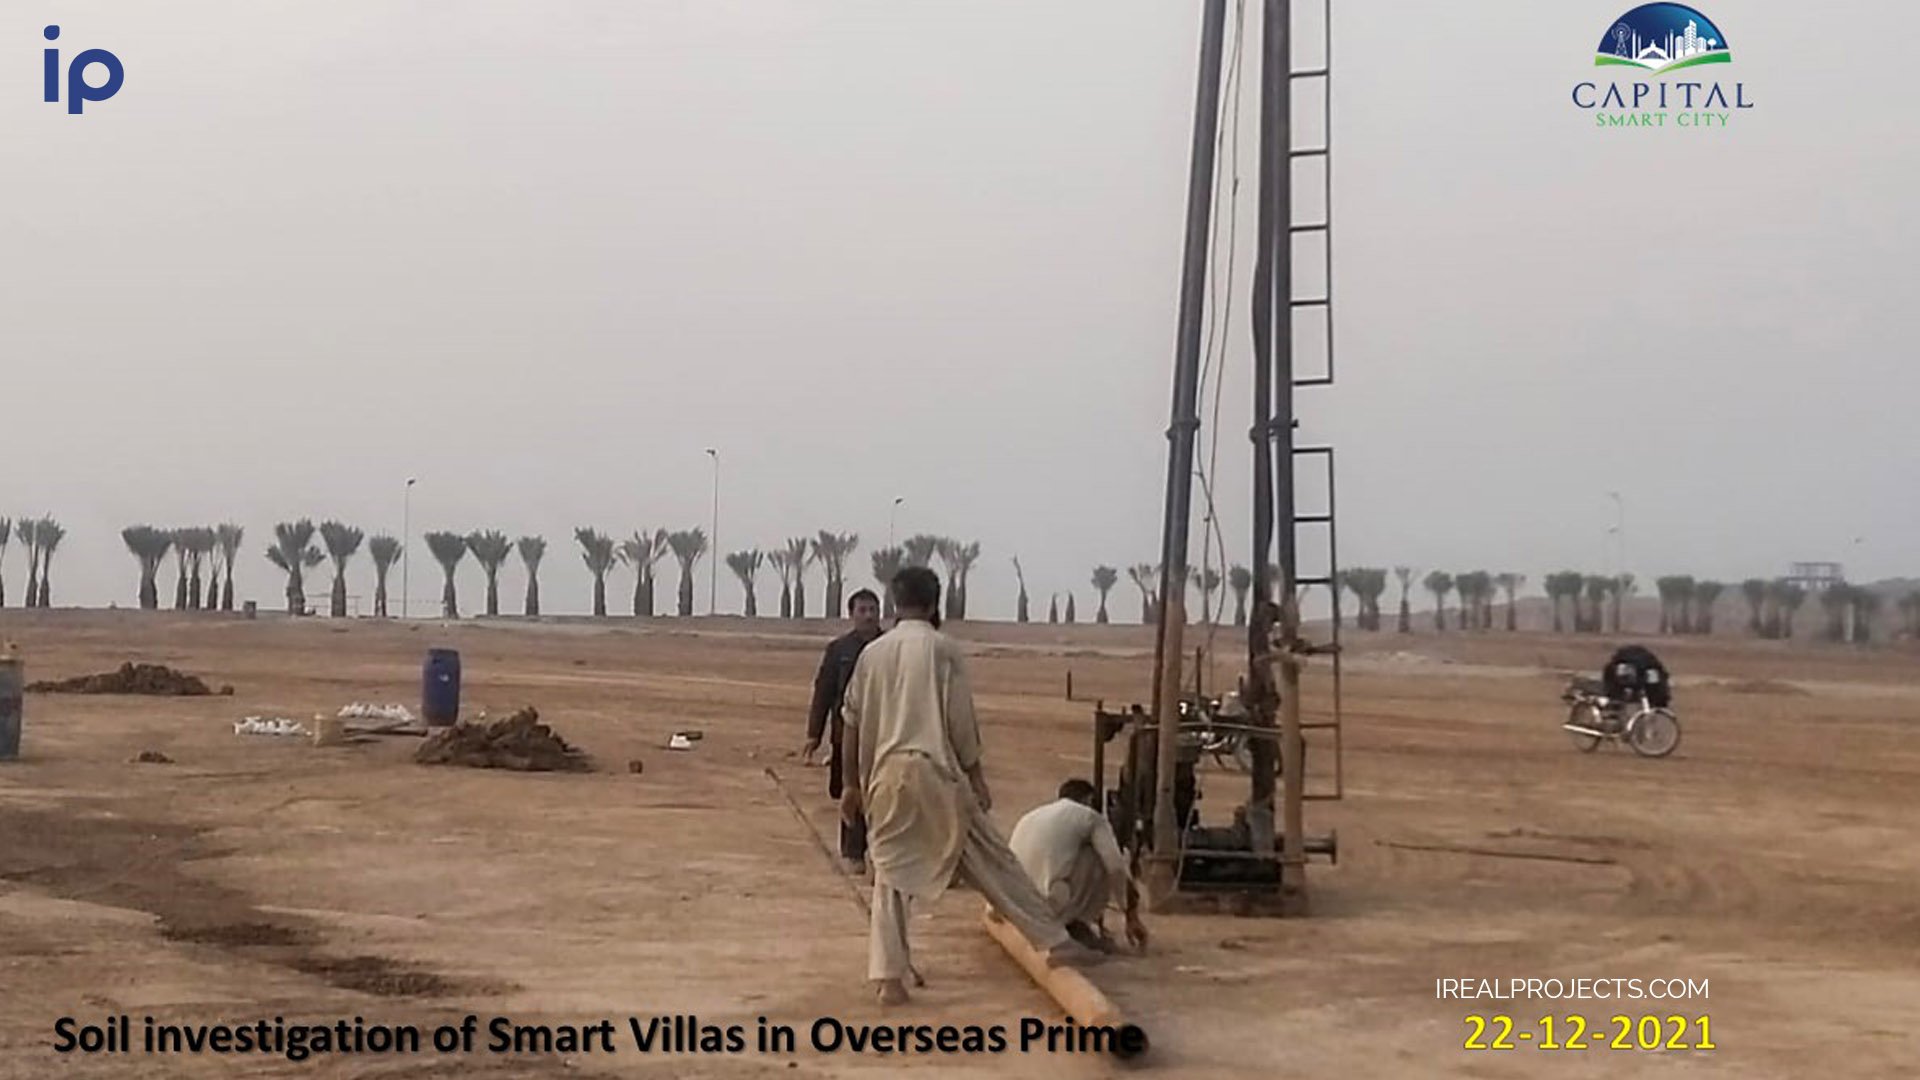 soil testing for overseas prime villas - Capital Smart City development